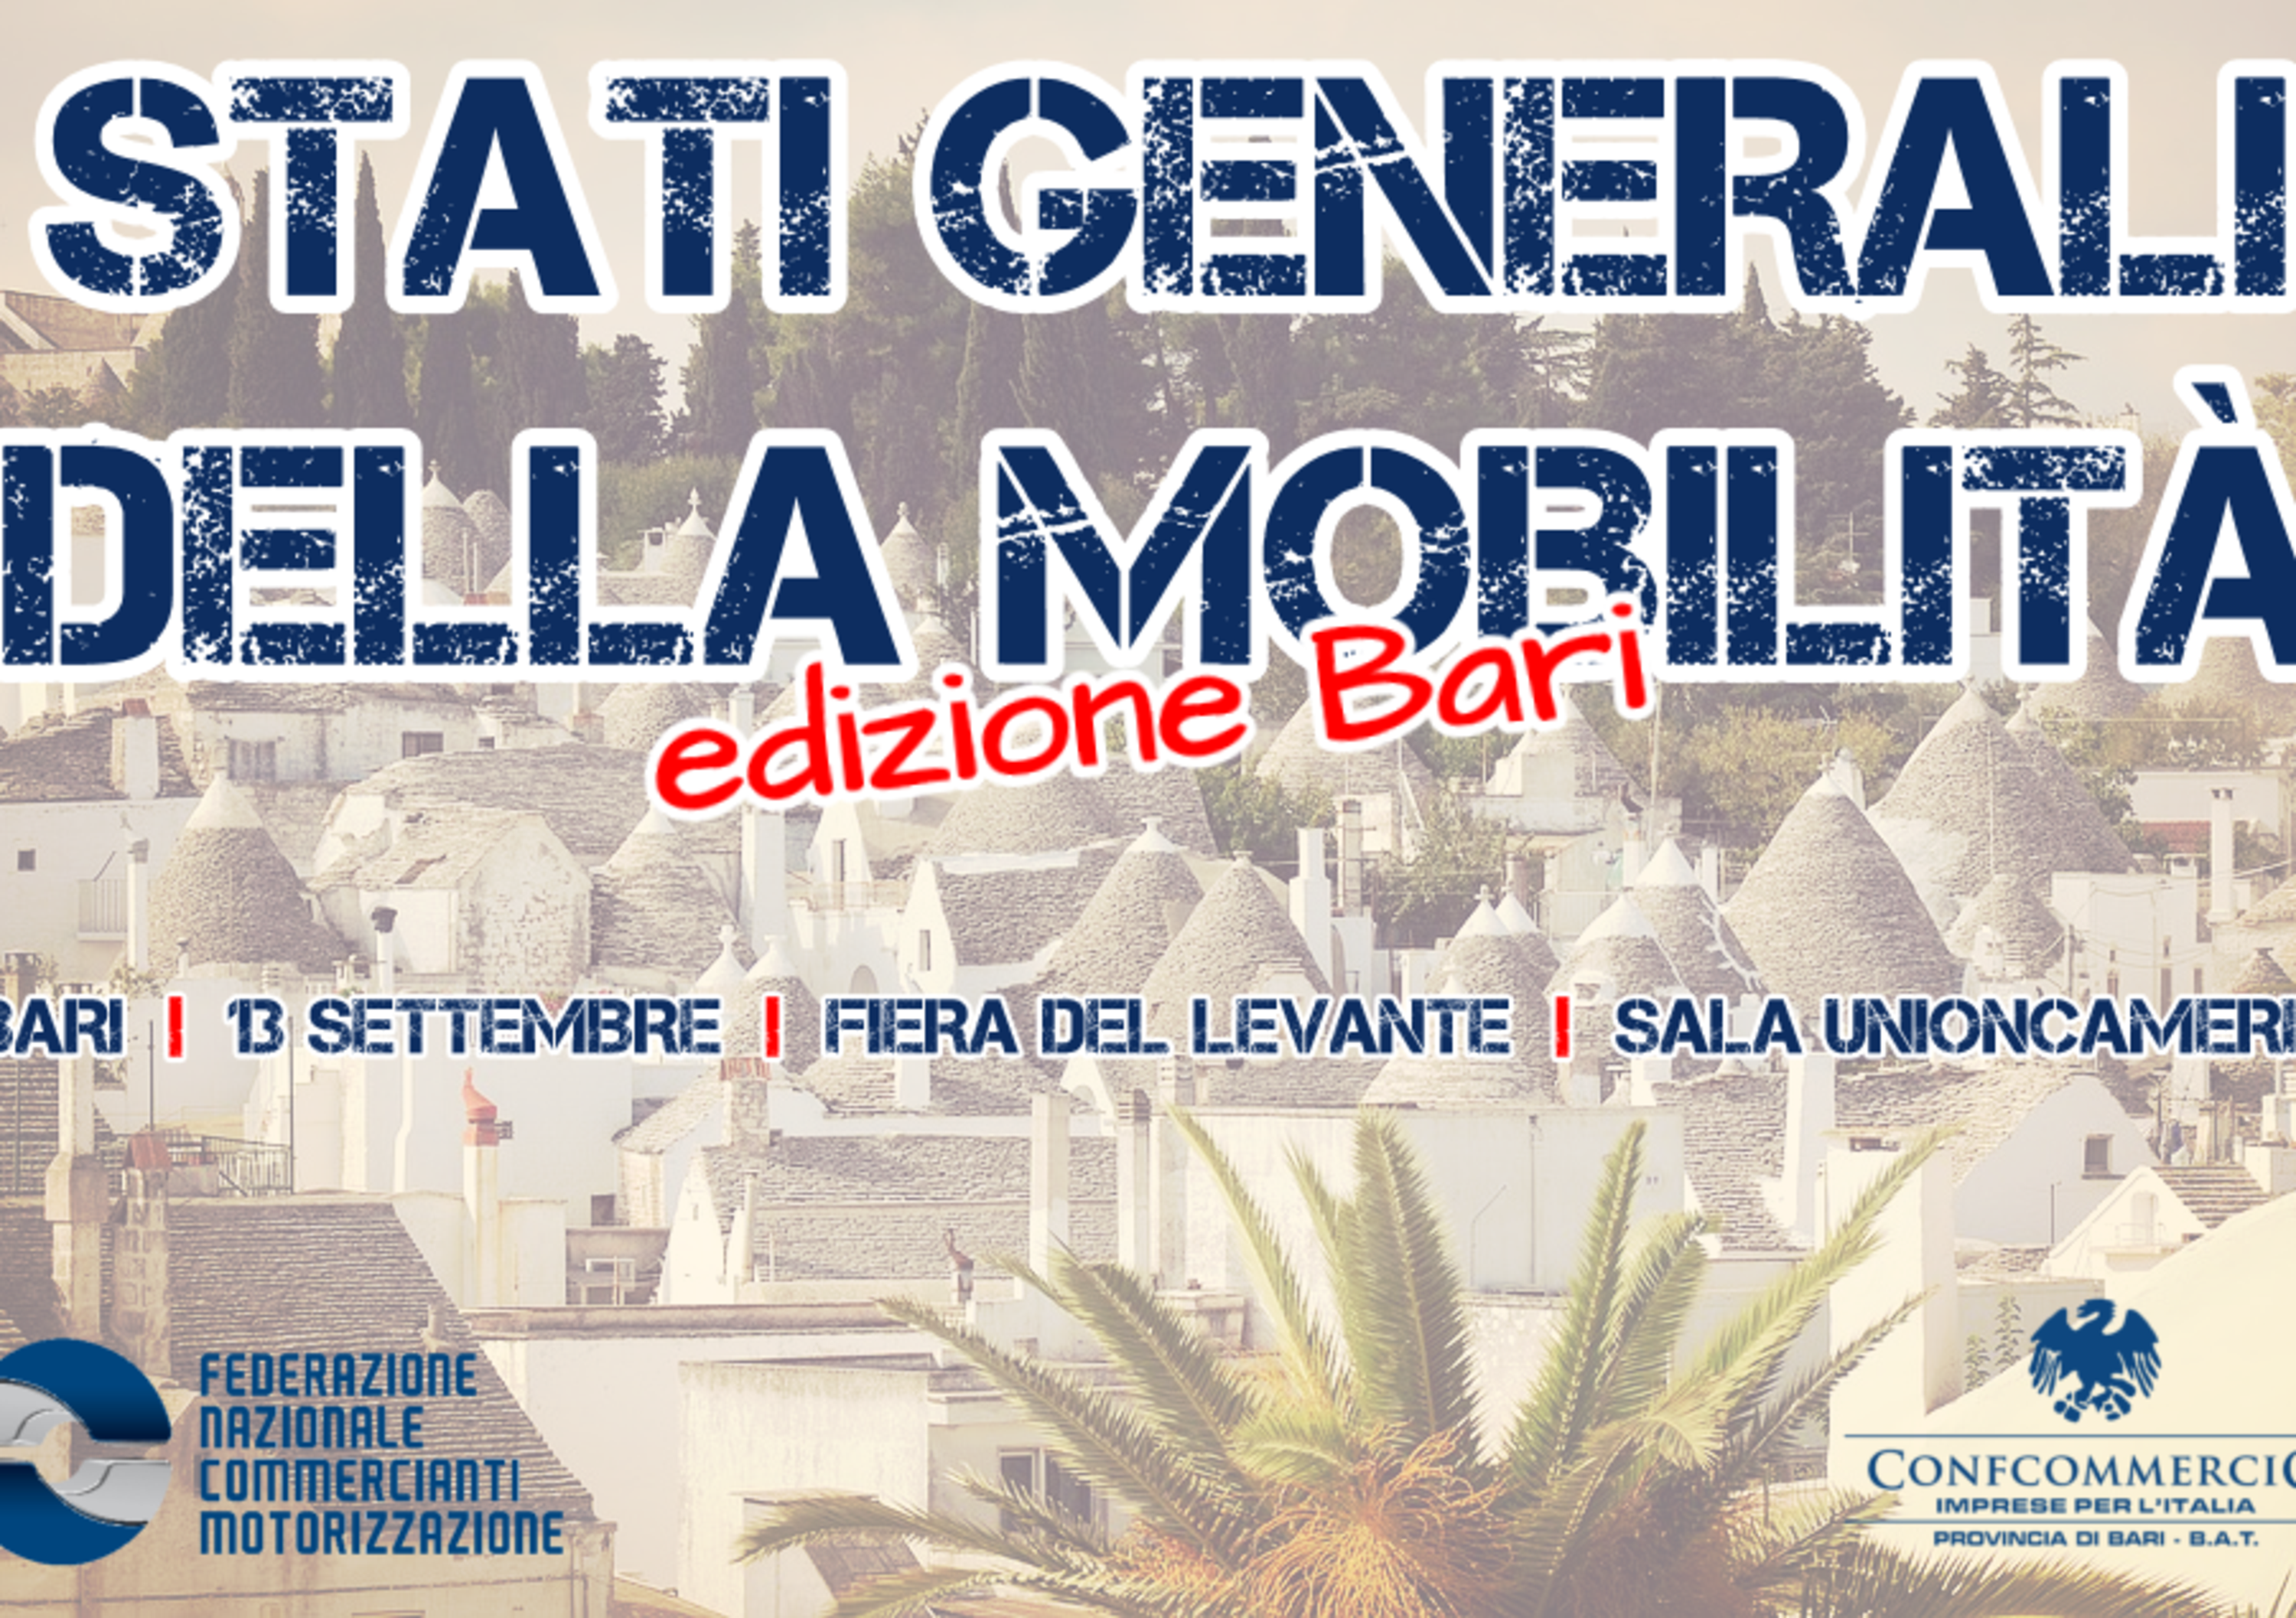 Stati Generali Mobilit&agrave; 2018, Bari